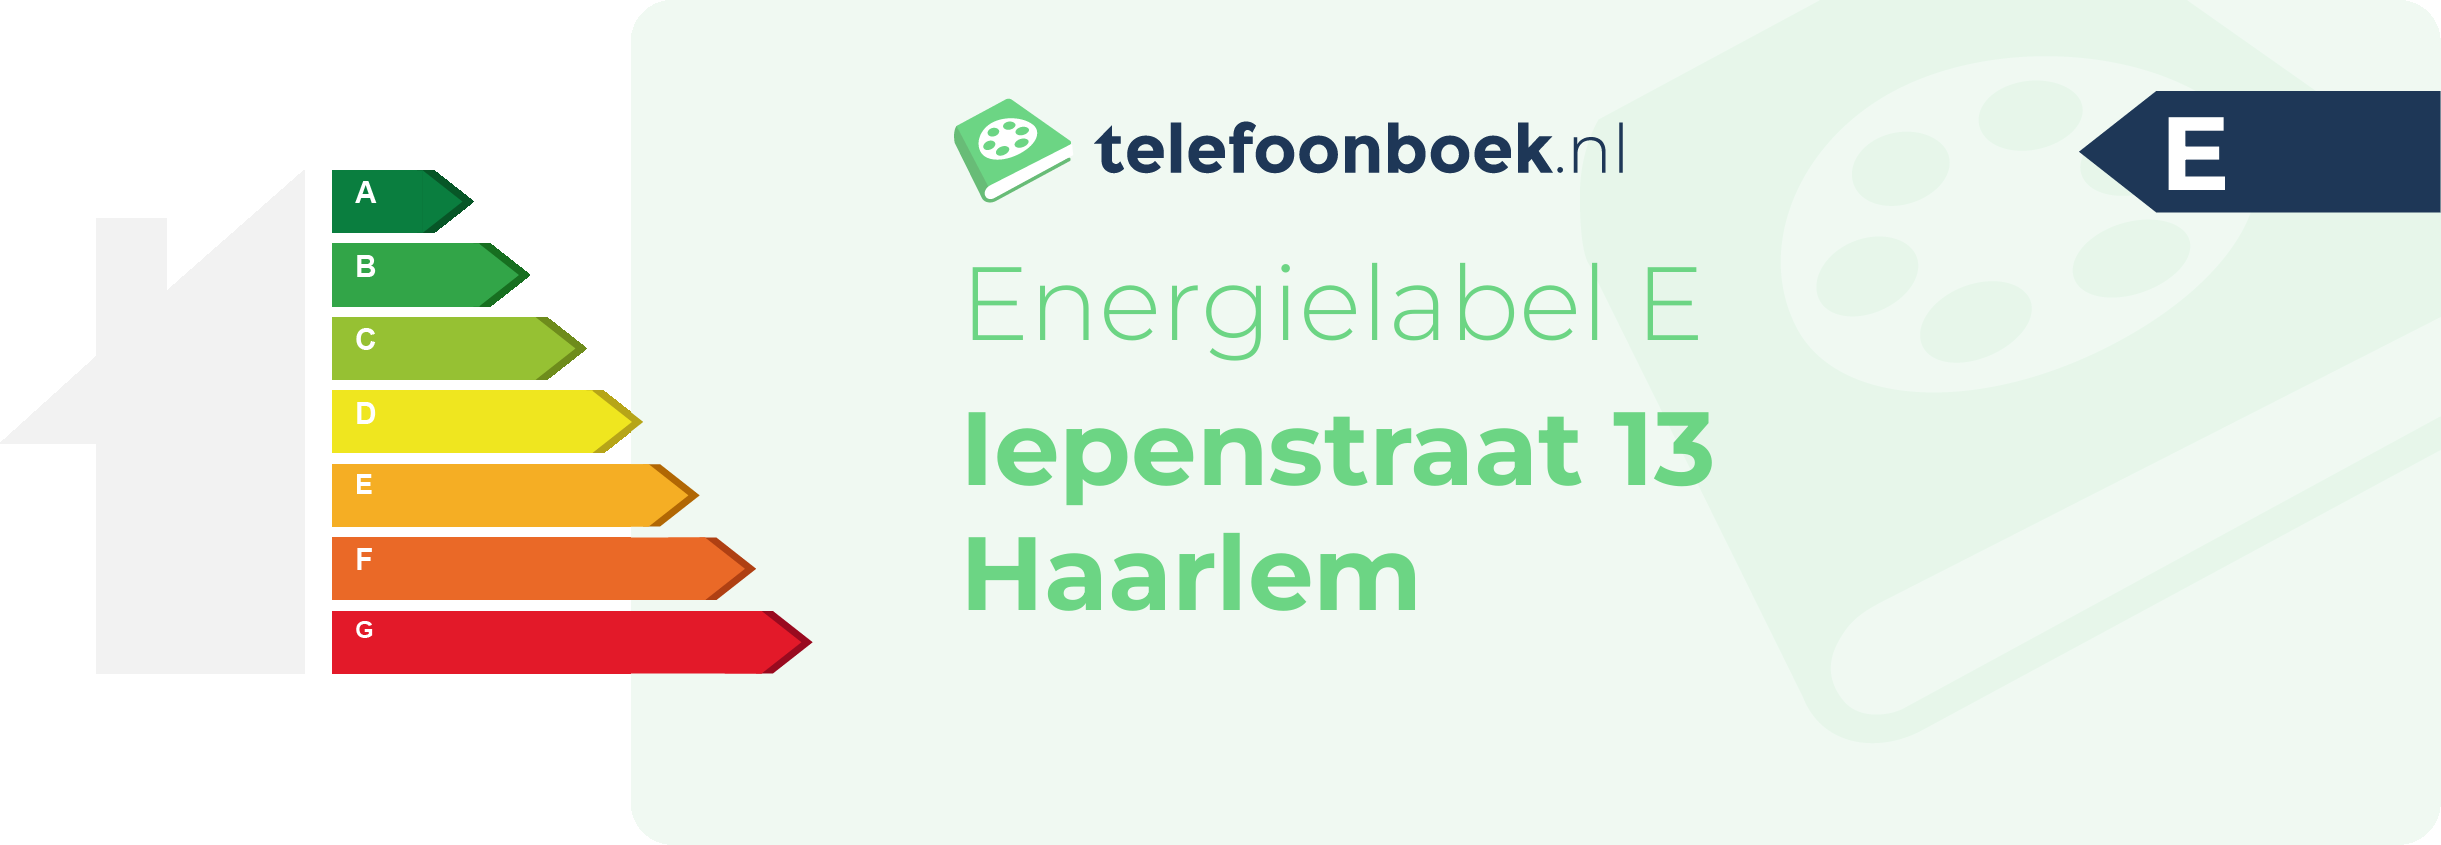 Energielabel Iepenstraat 13 Haarlem